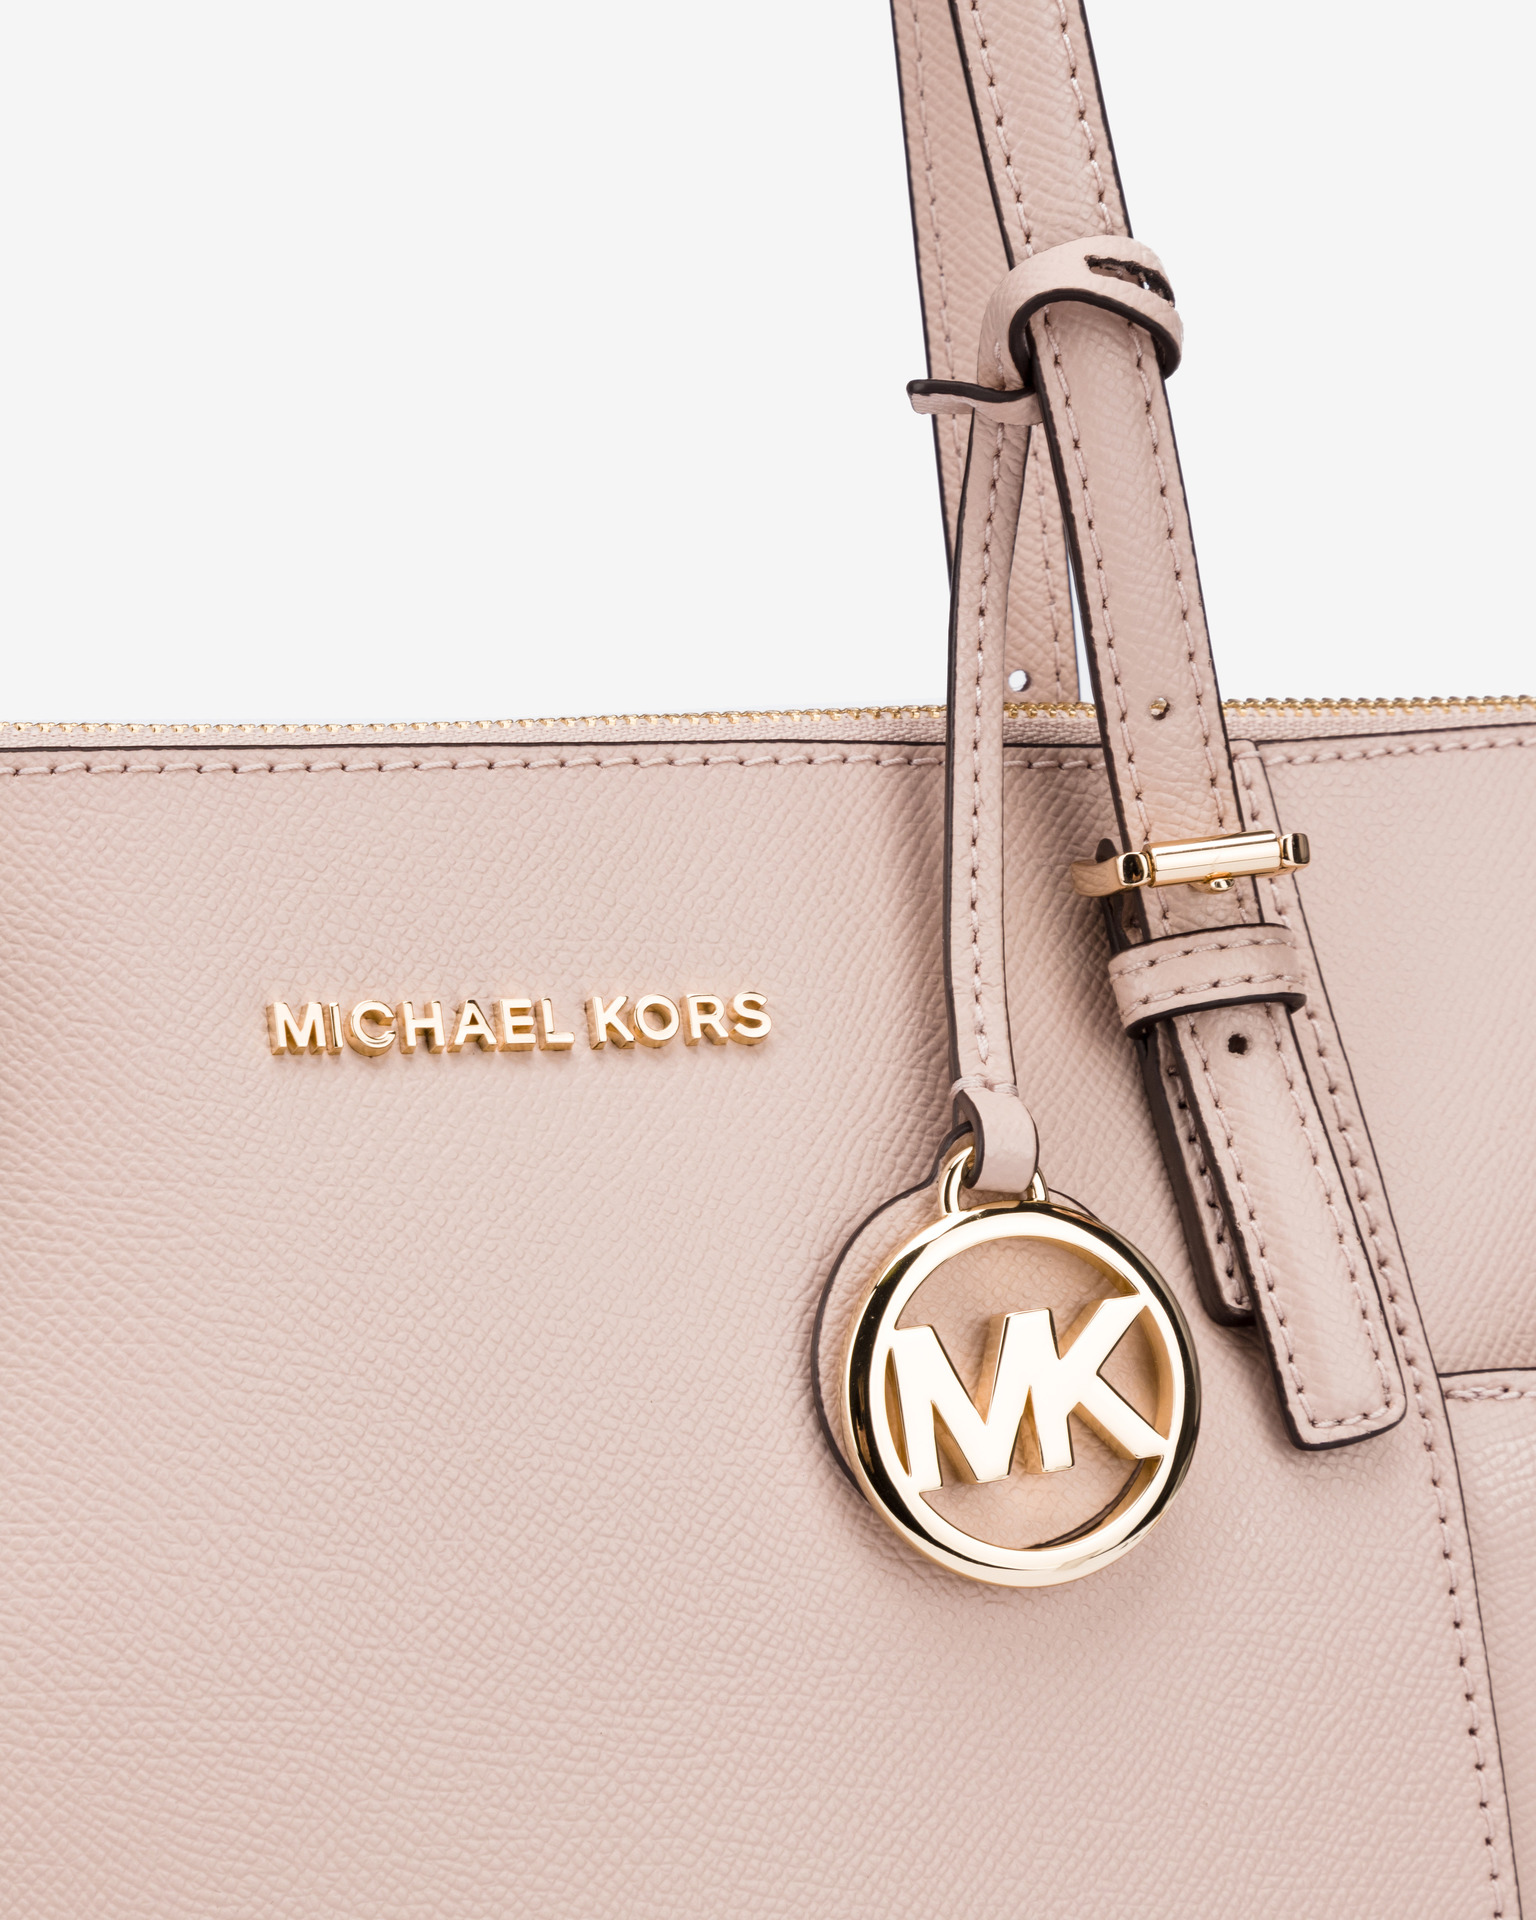 Michael Kors - Jet Set Medium Handbag